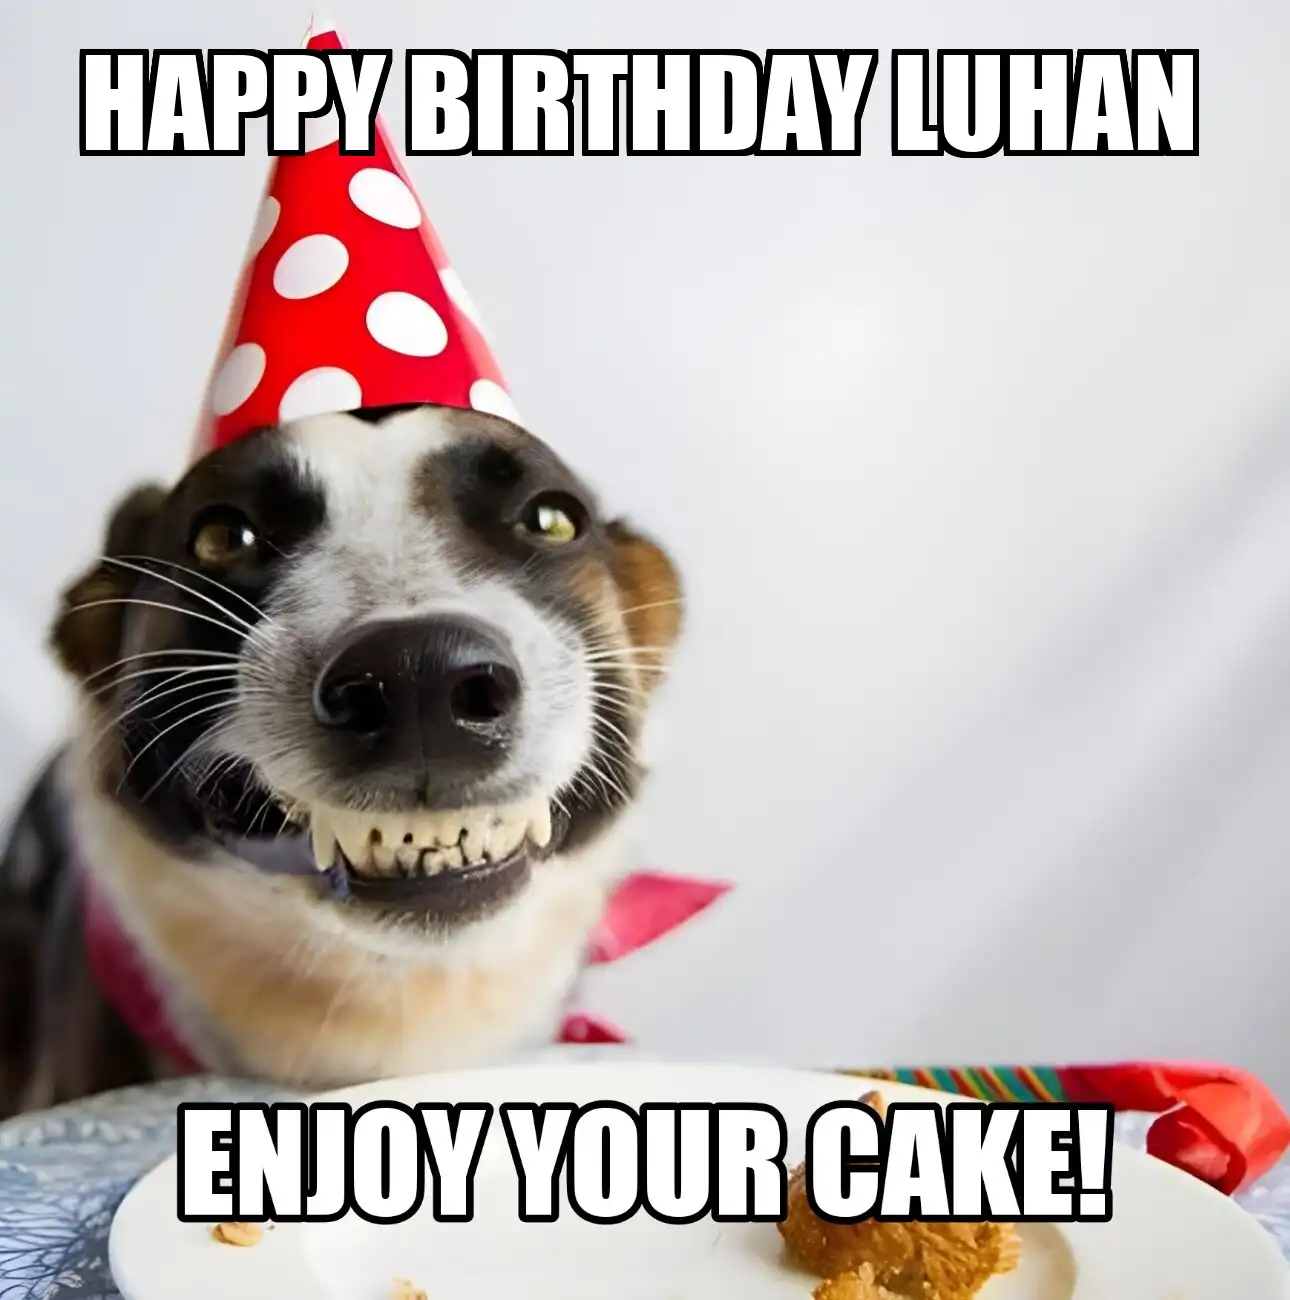 Happy Birthday Luhan Enjoy Your Cake Dog Meme